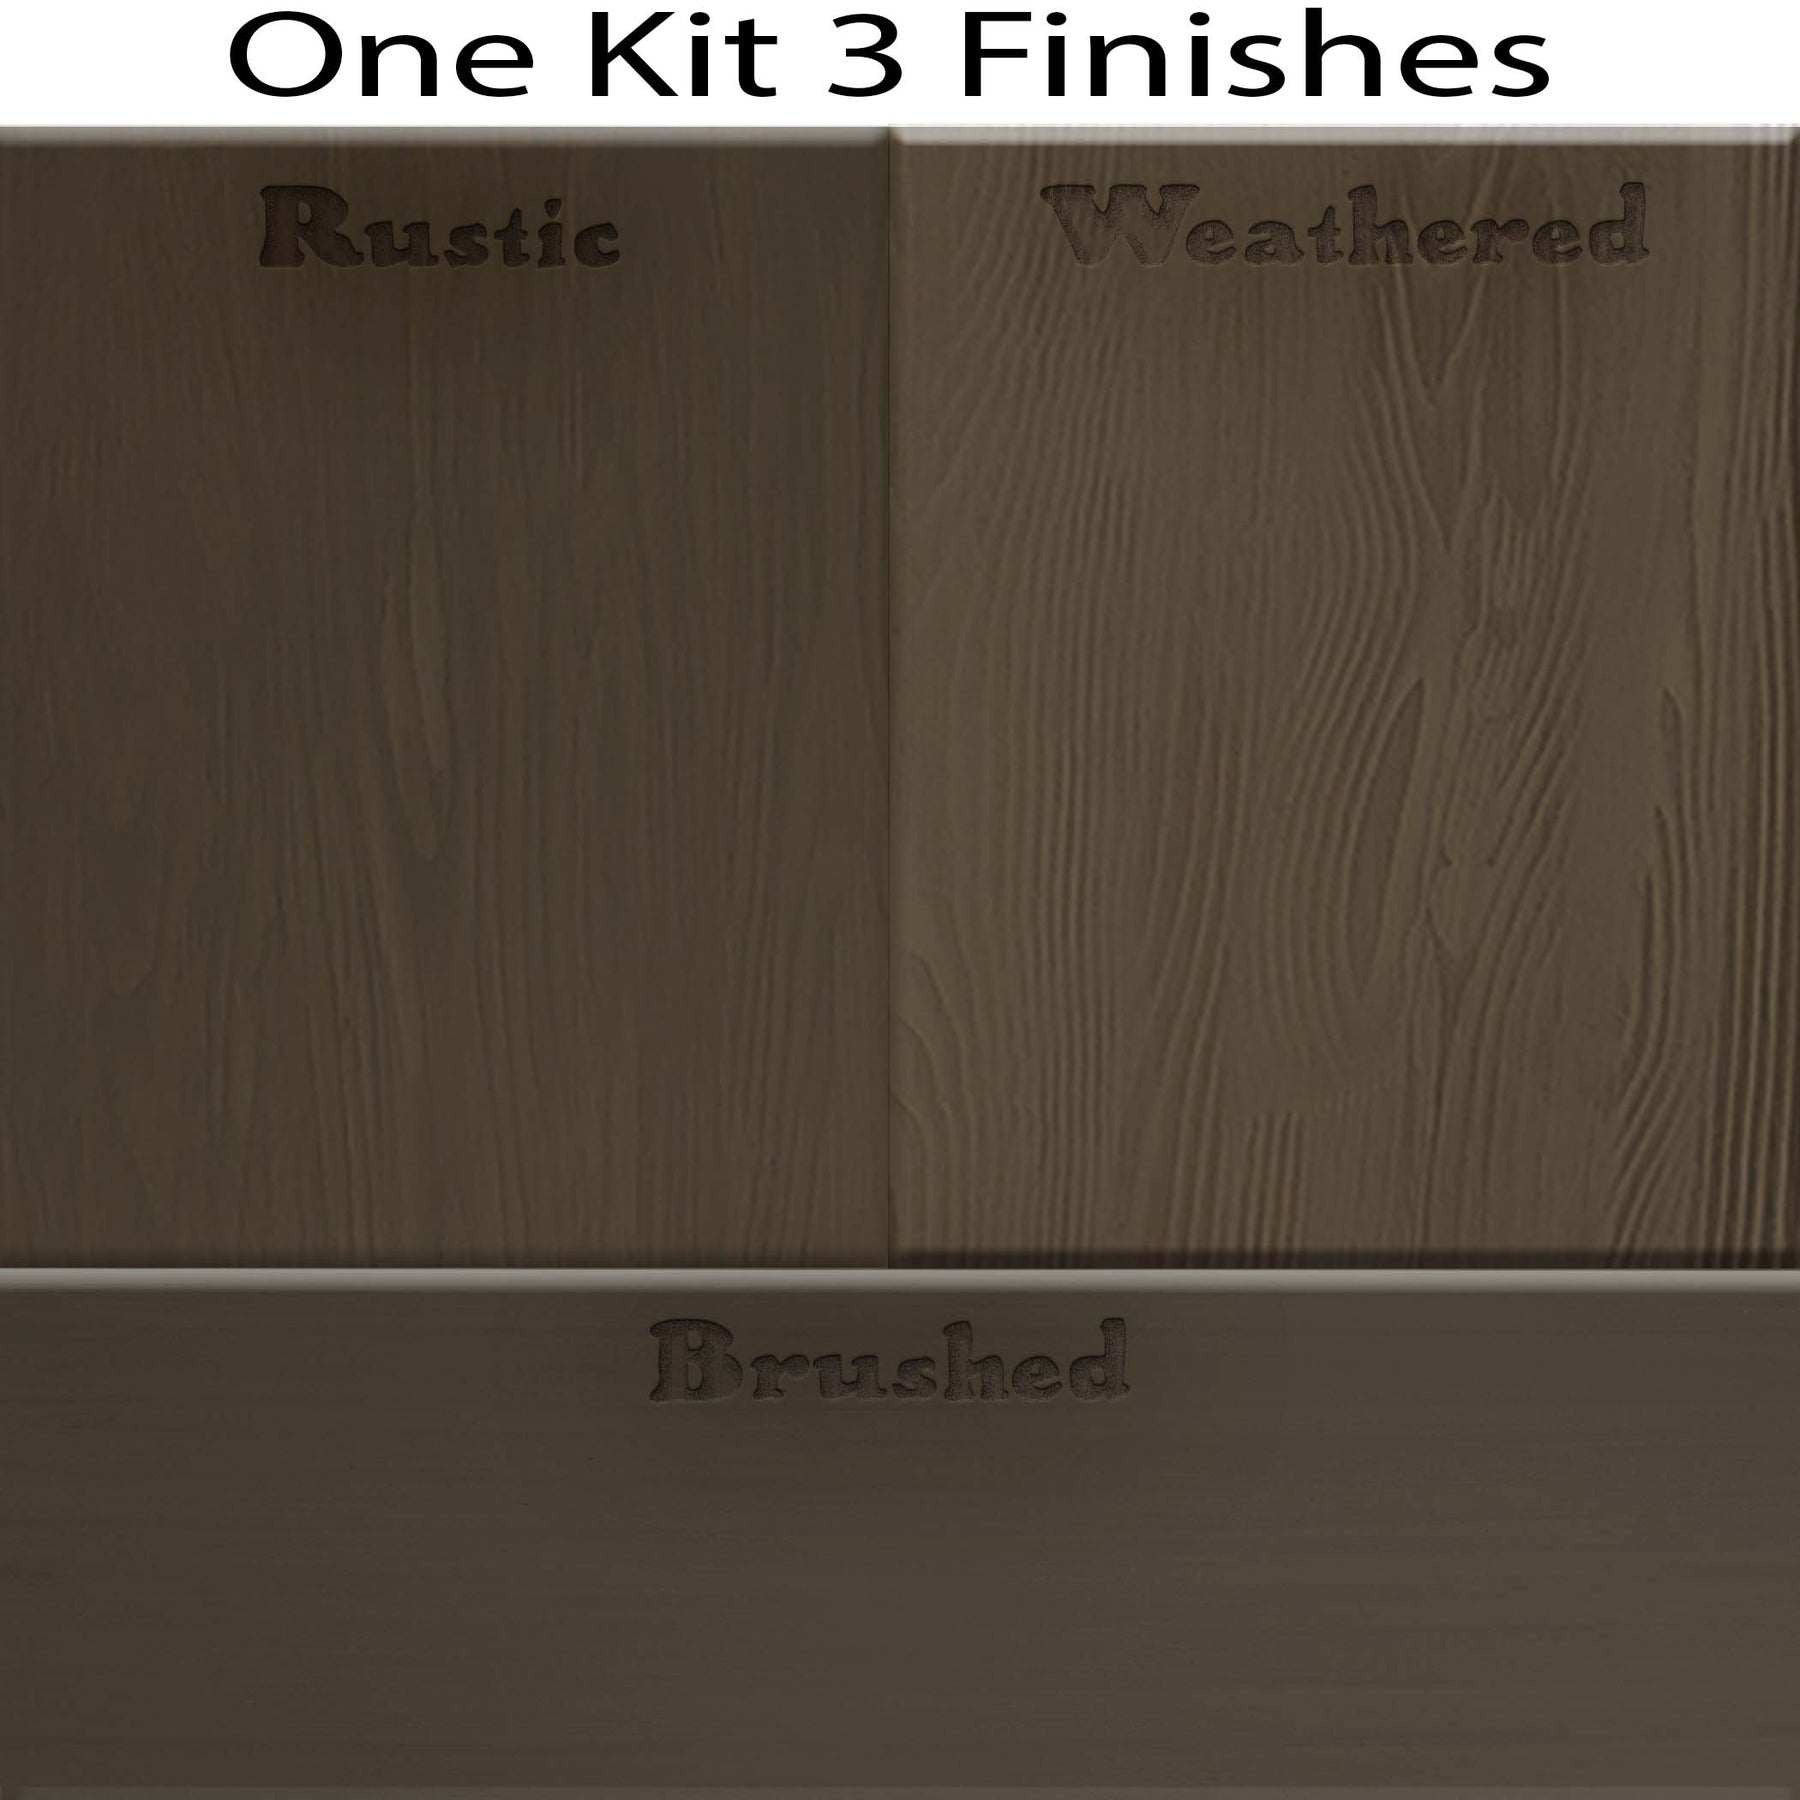 Wood'n Cabinet Kit (24 Door / Grained) - Charcoal